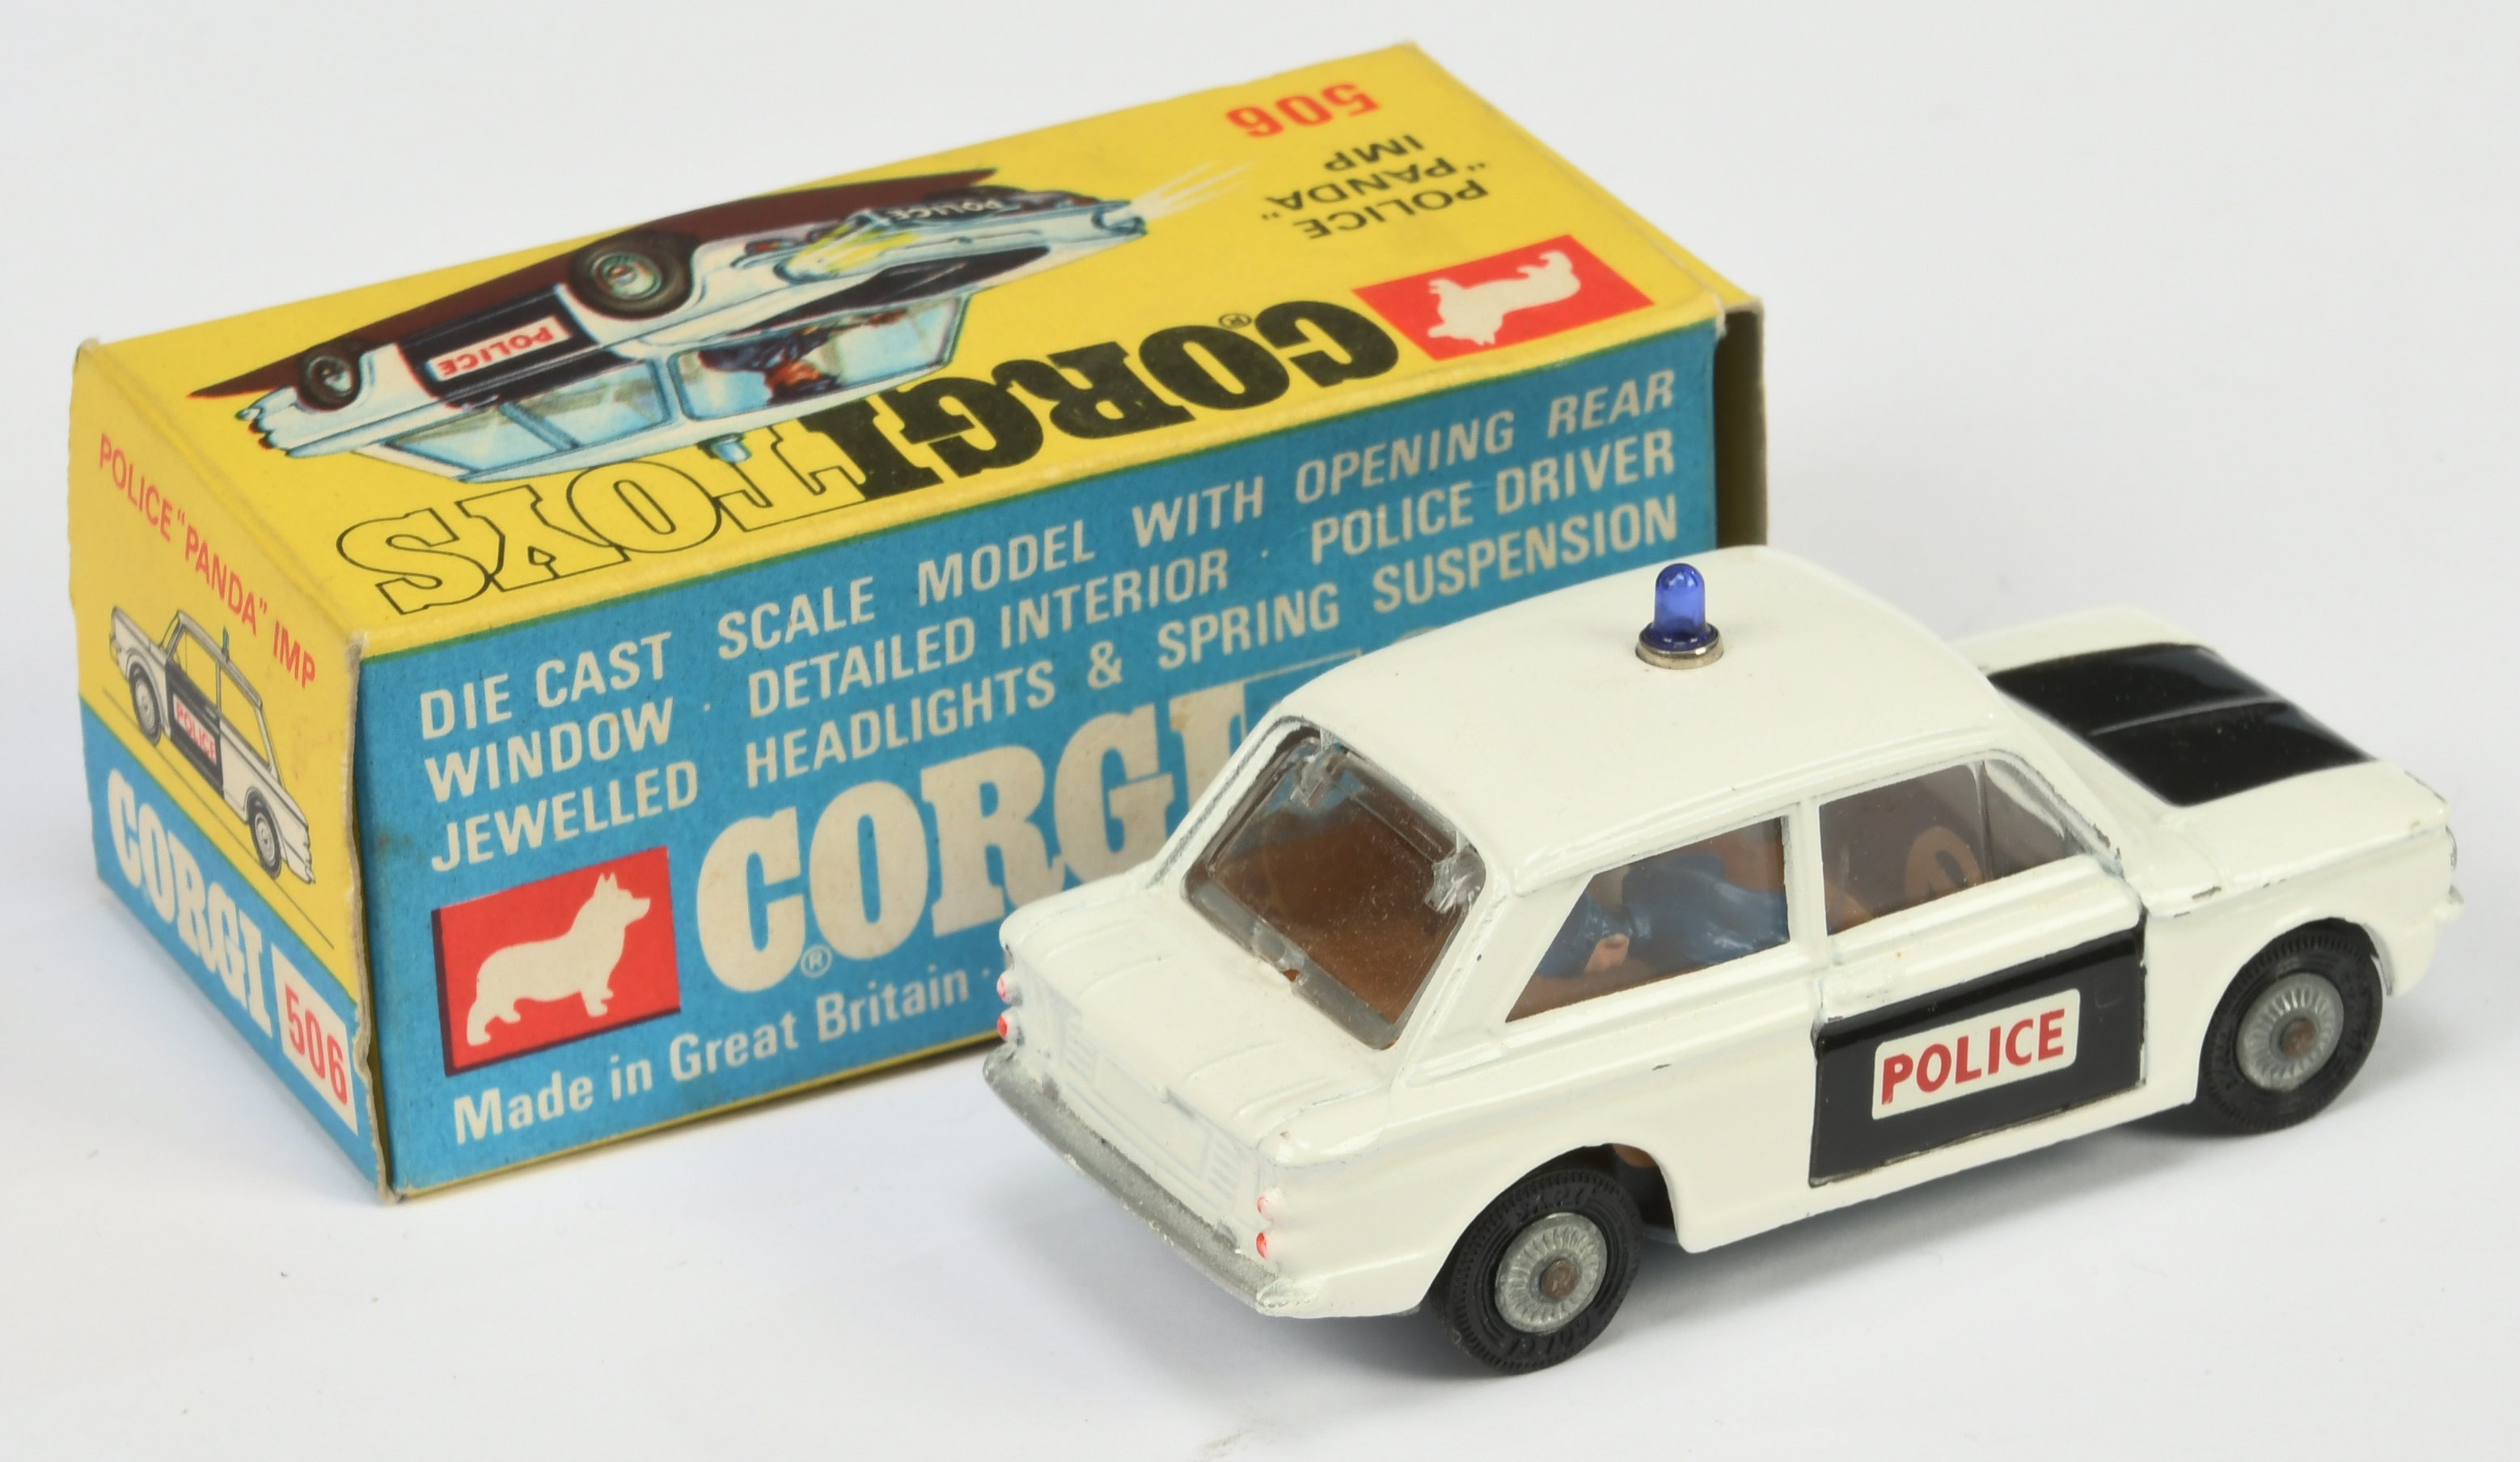 Corgi Toys 506 Sunbeam Imp "Police" Car  - White  body with black doors and bonnet, brown interio... - Image 2 of 2